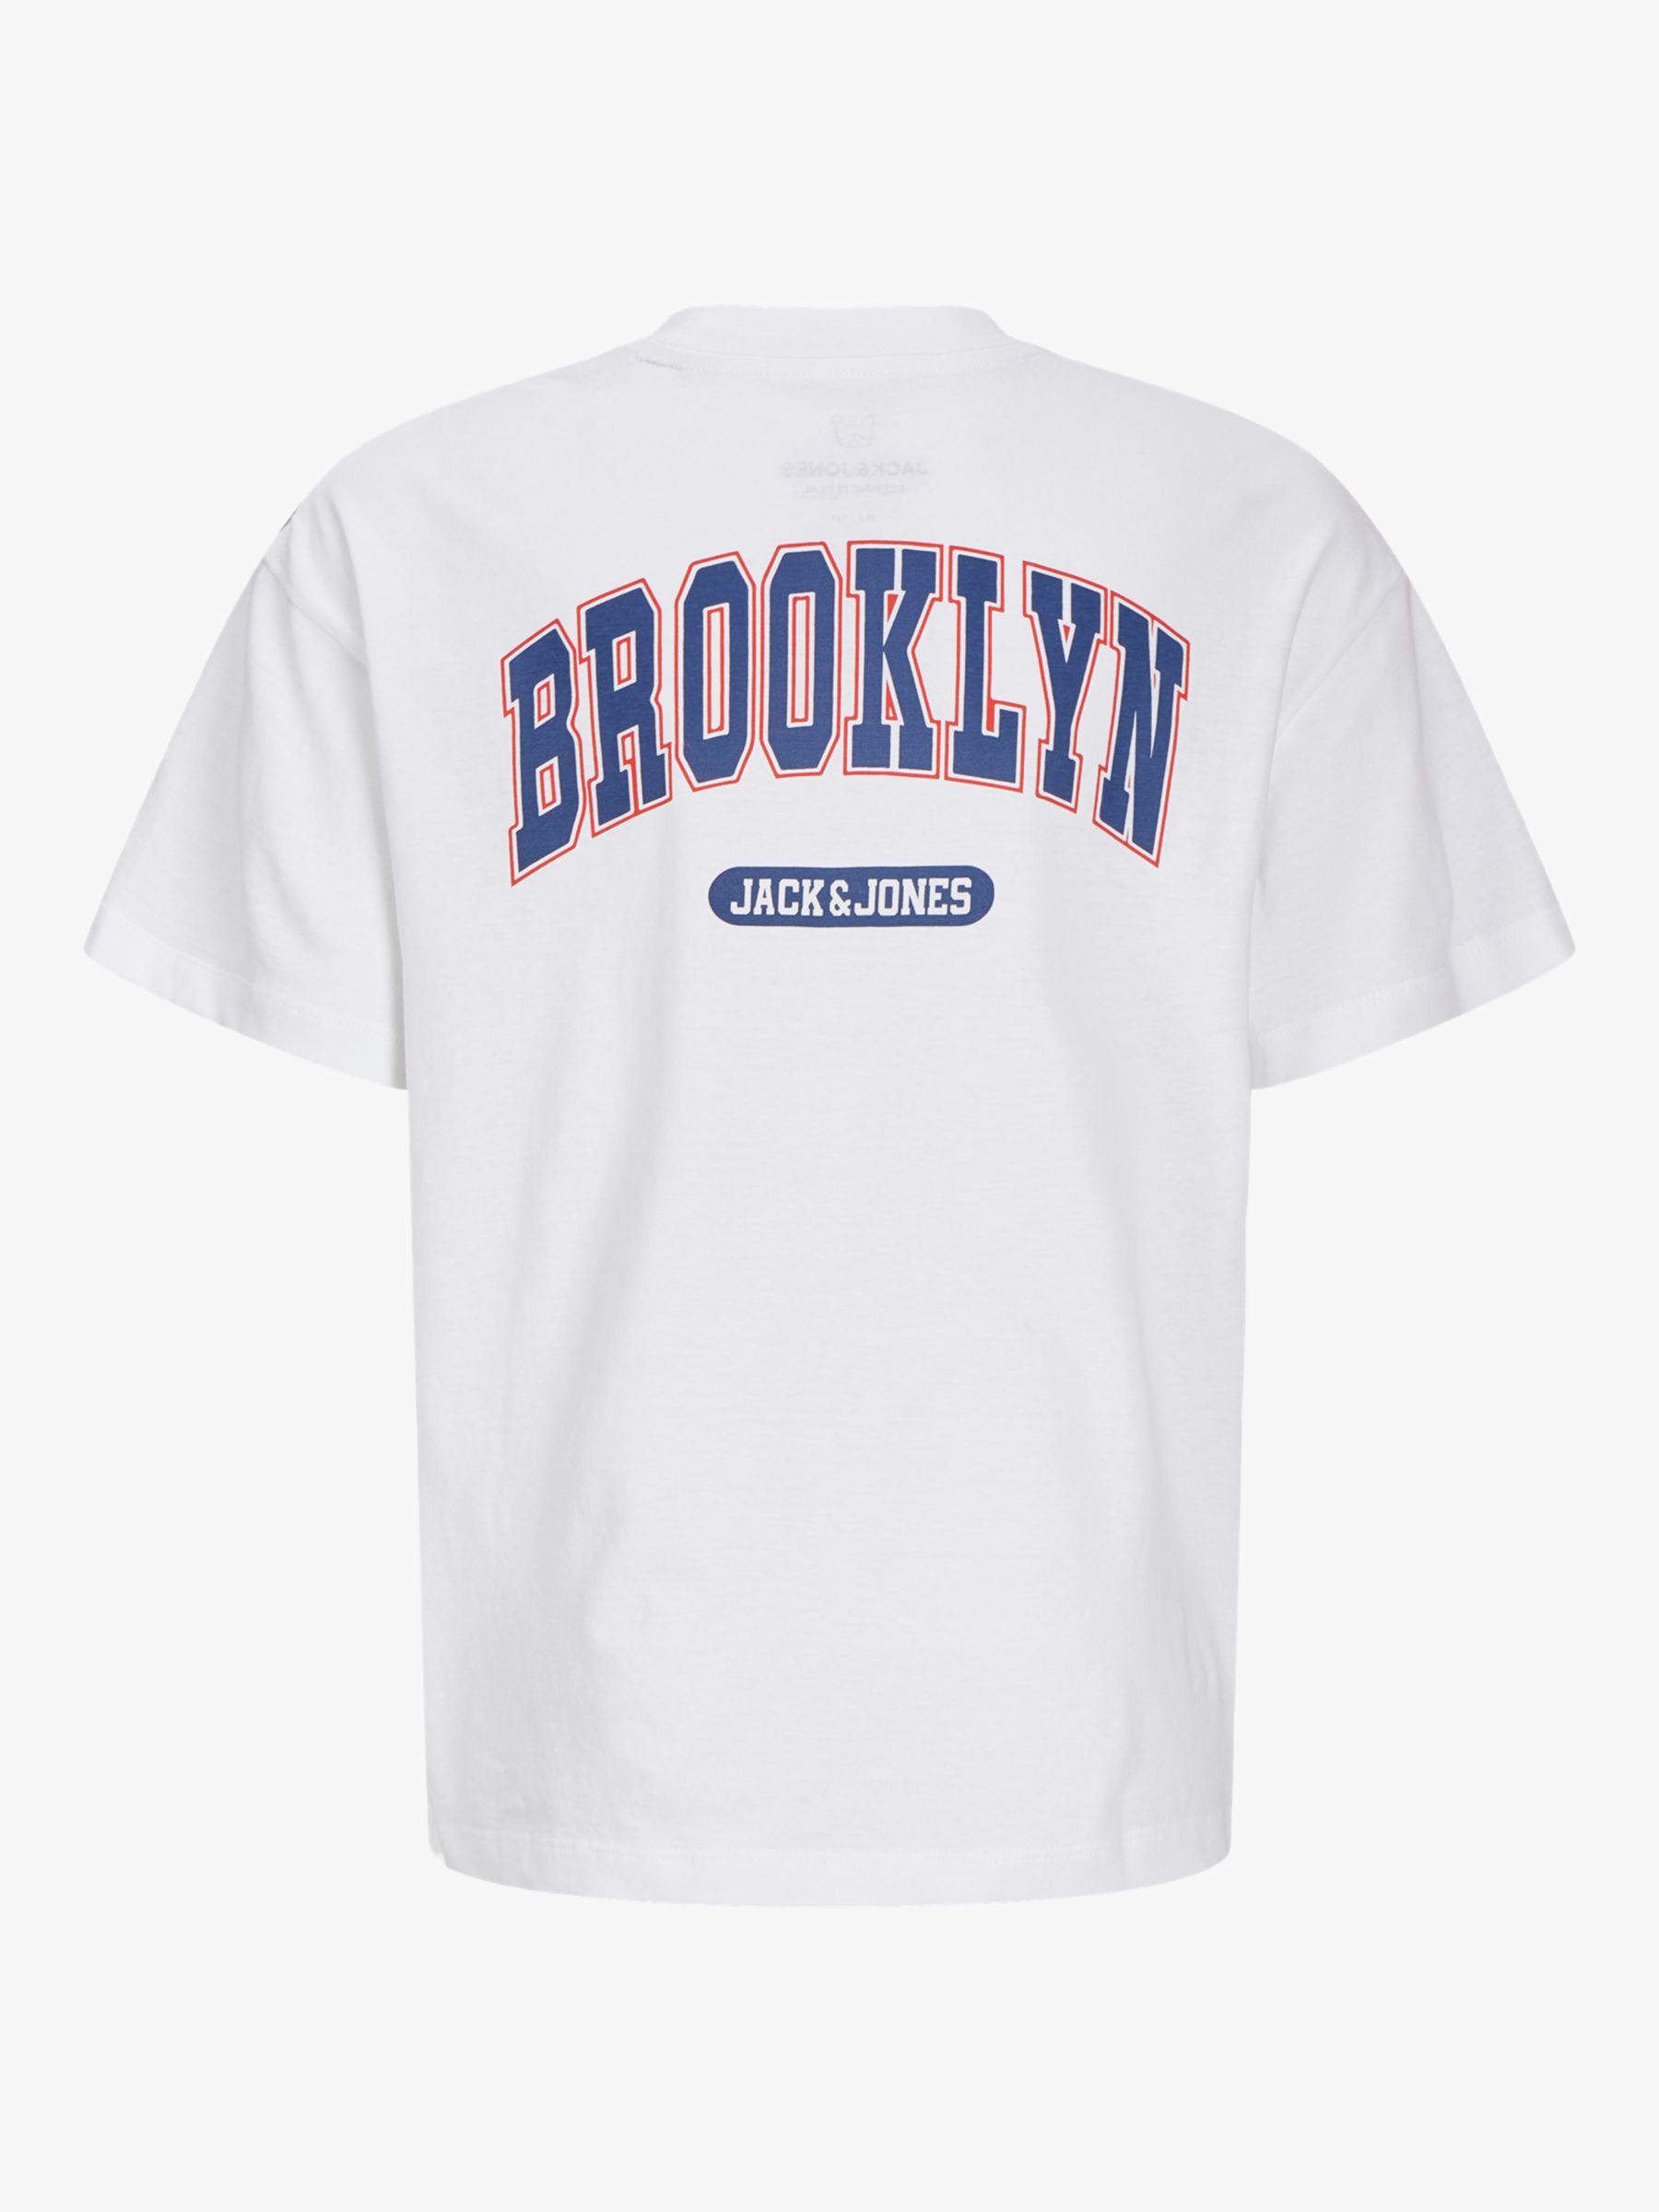 Jack & Jones Kids' Bradley Brooklyn T-Shirt, Bright White, 8 years